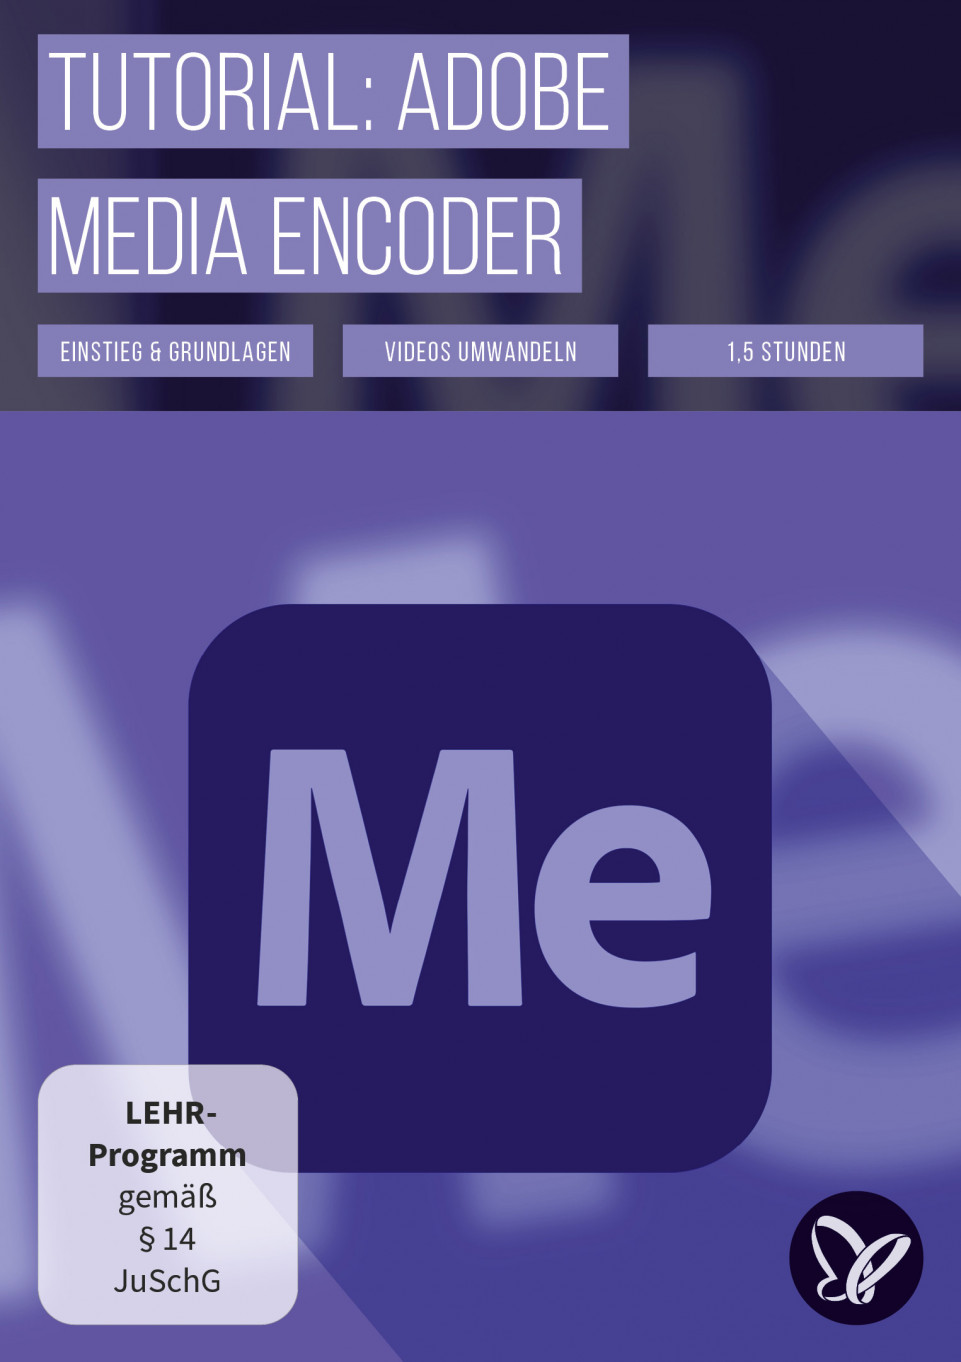 Adobe Media Encoder: Tutorial zum Video-Konverter